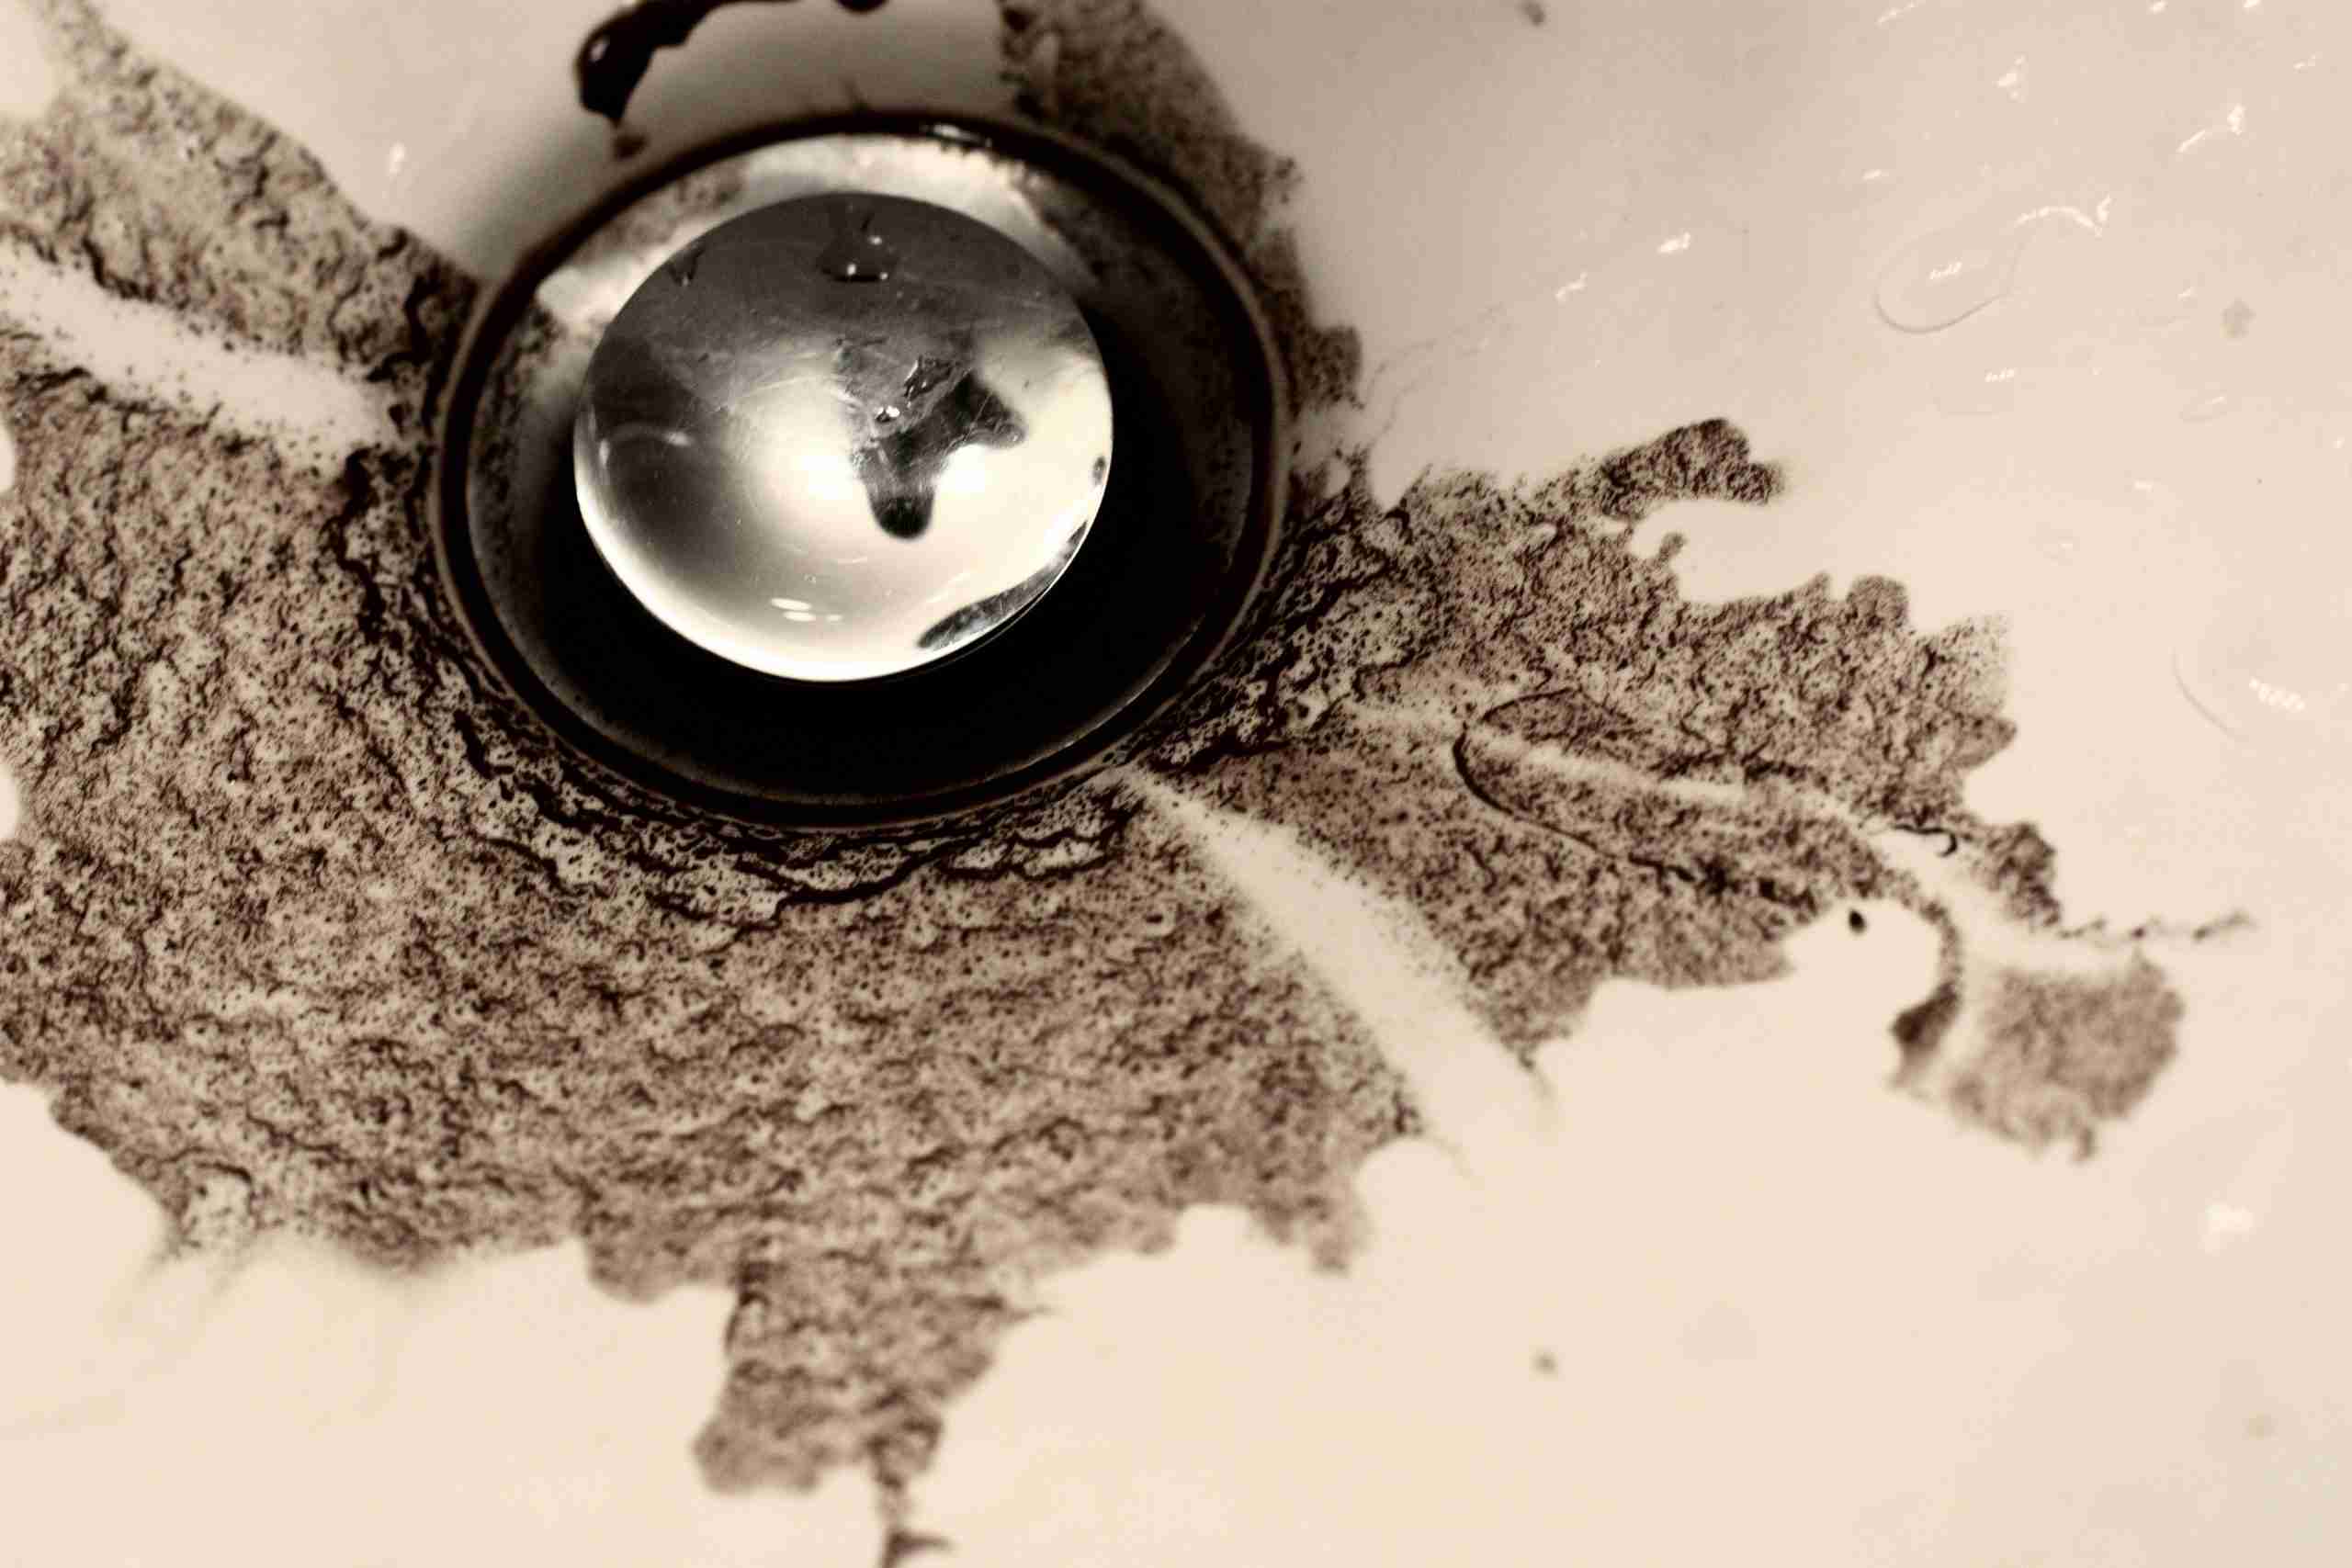 coffee grounds clogging kitchen sink